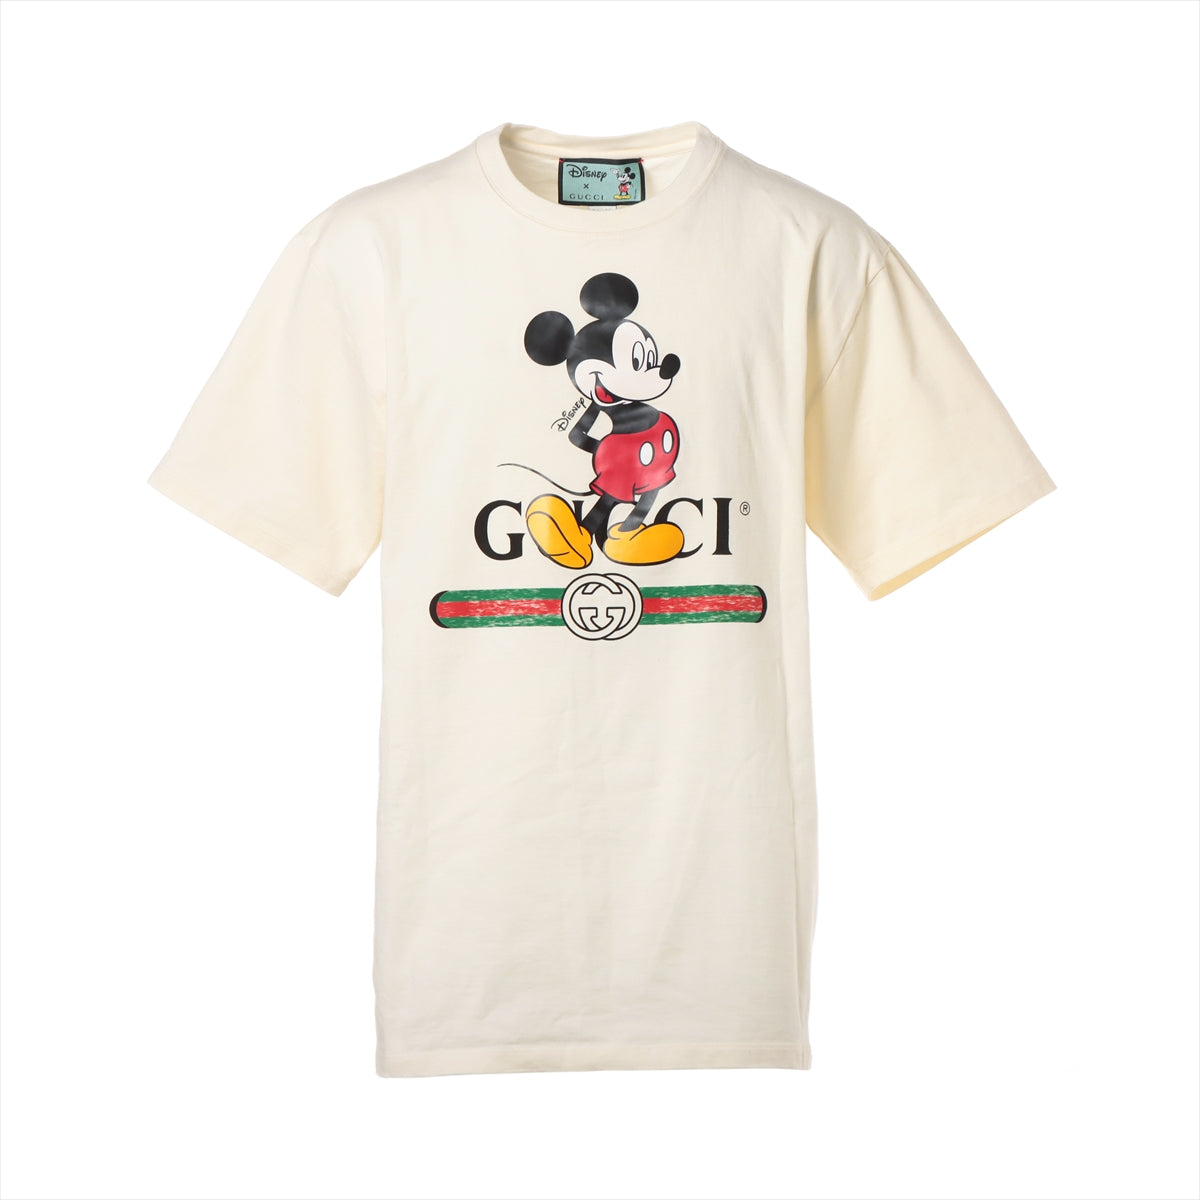 Gucci x Disney 20SS Cotton T-shirt M Men's Ivory  565806